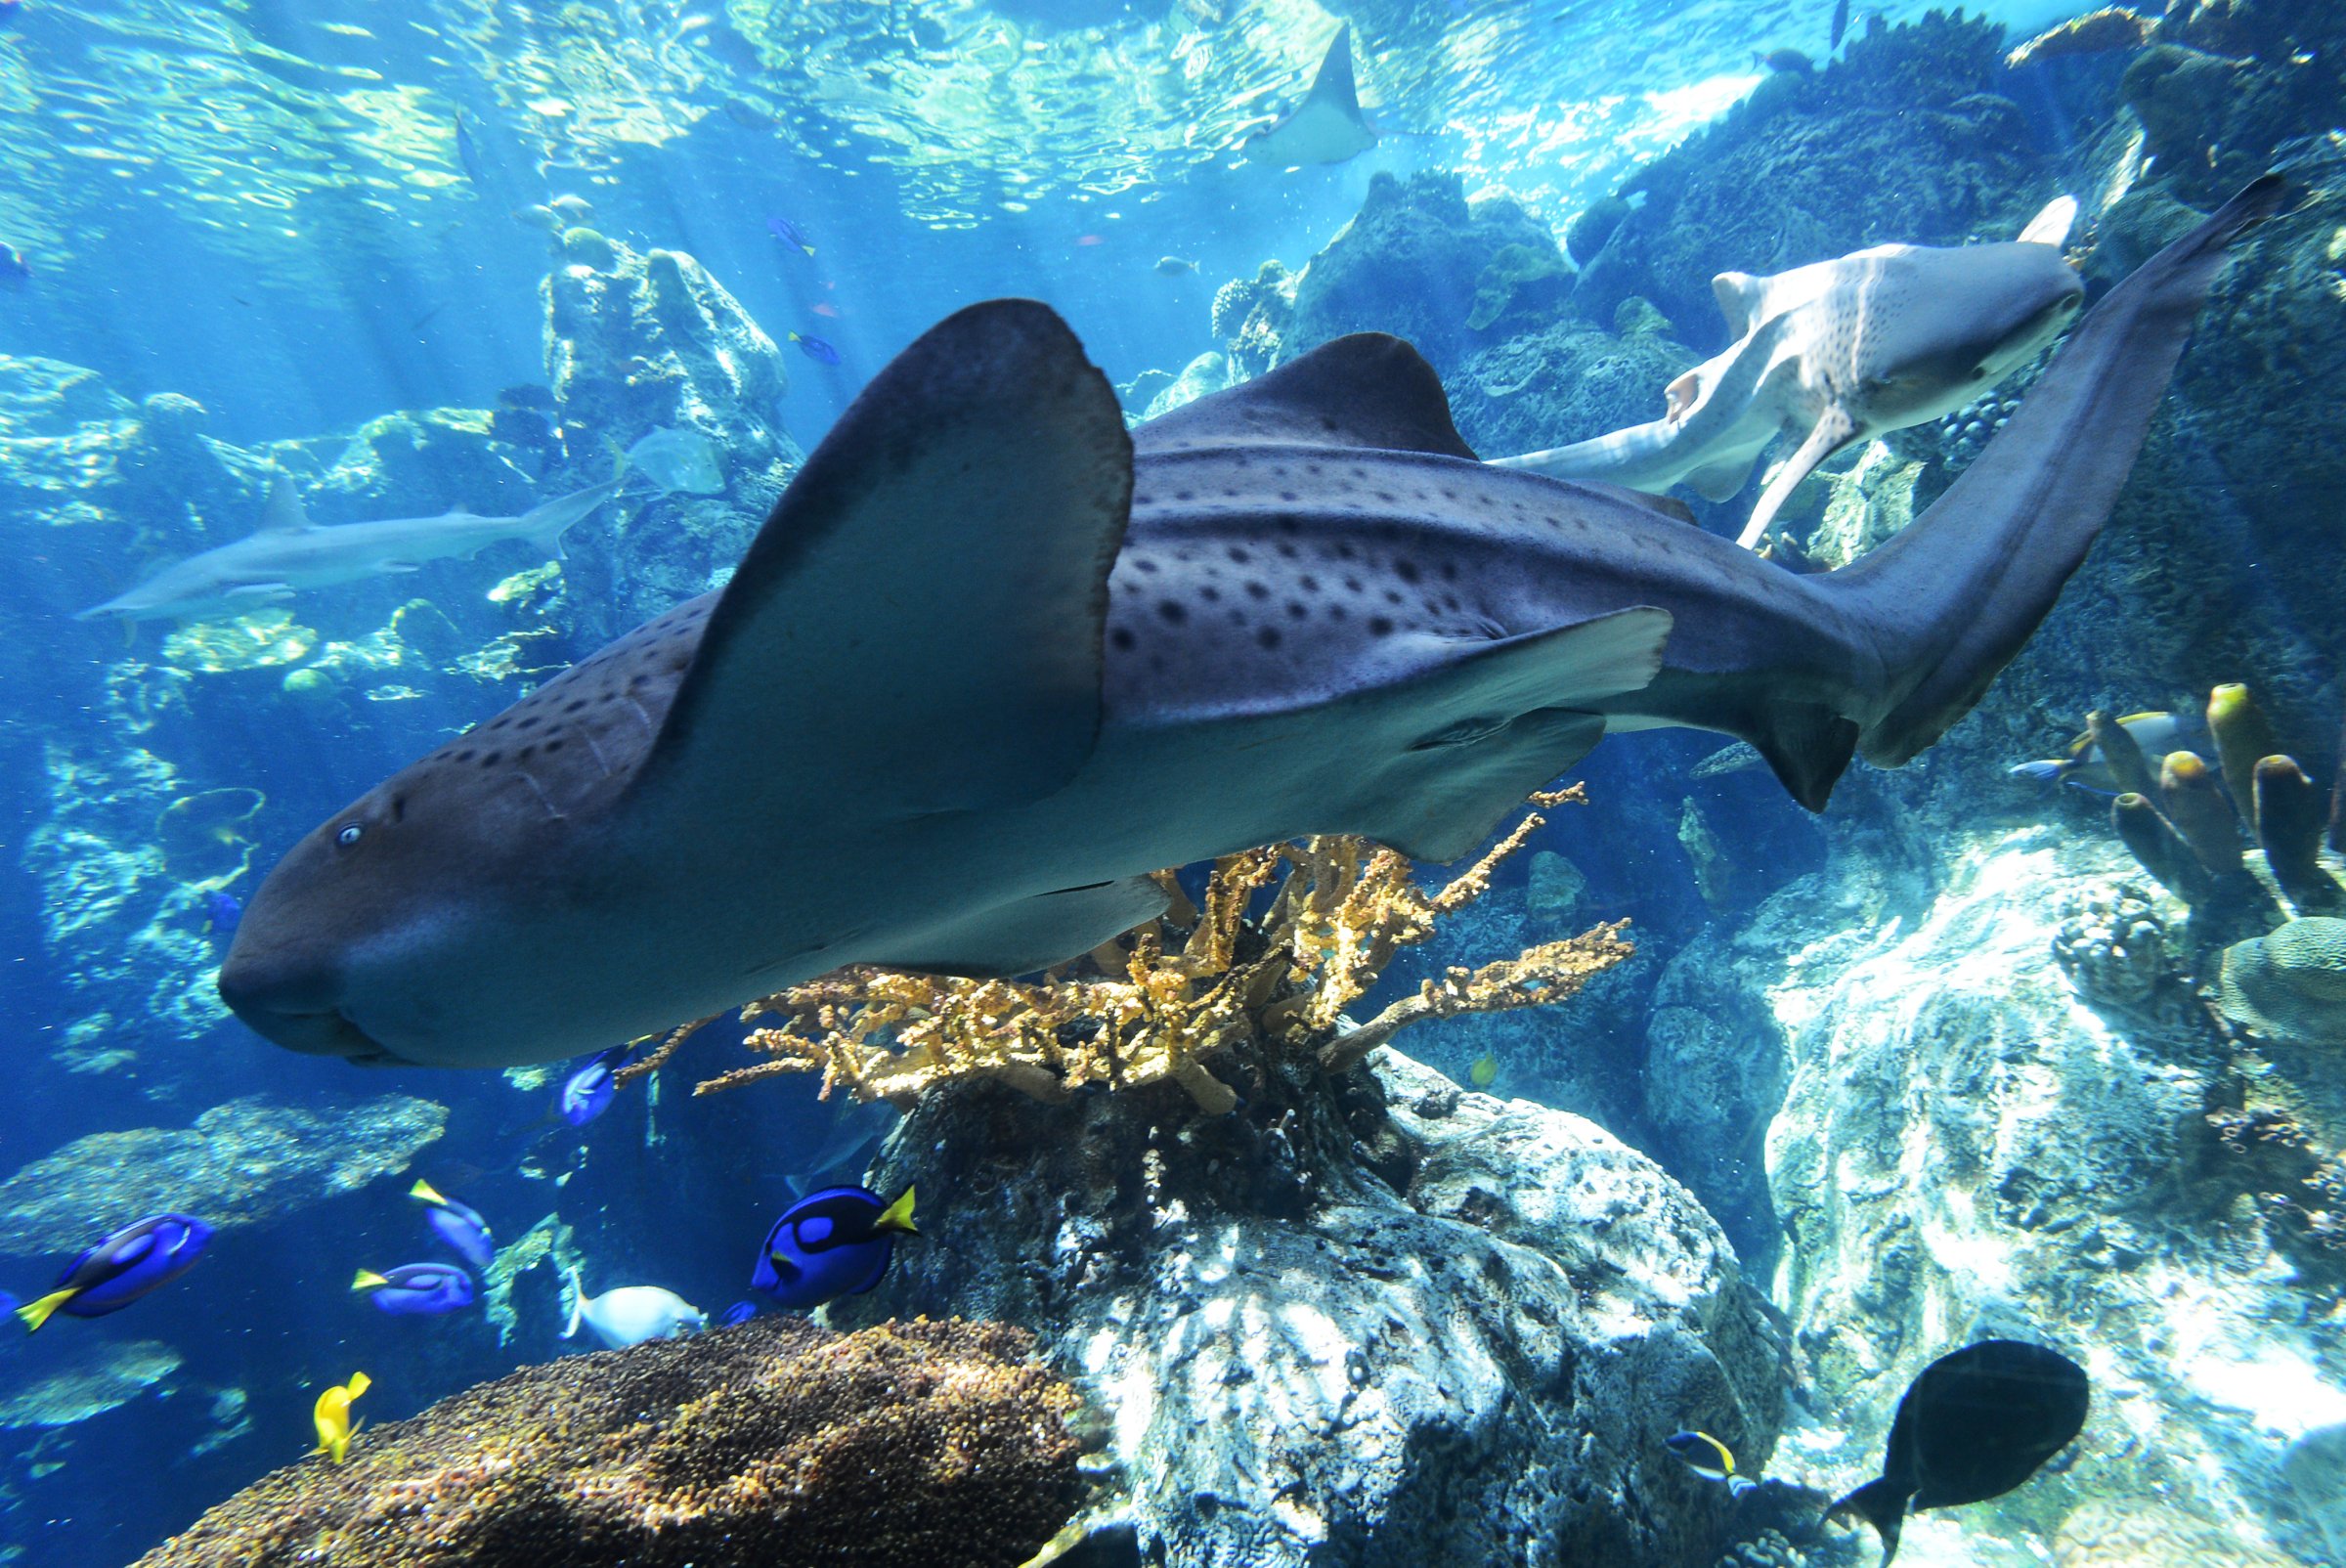 Zebra shark swims at the Aquarium of the